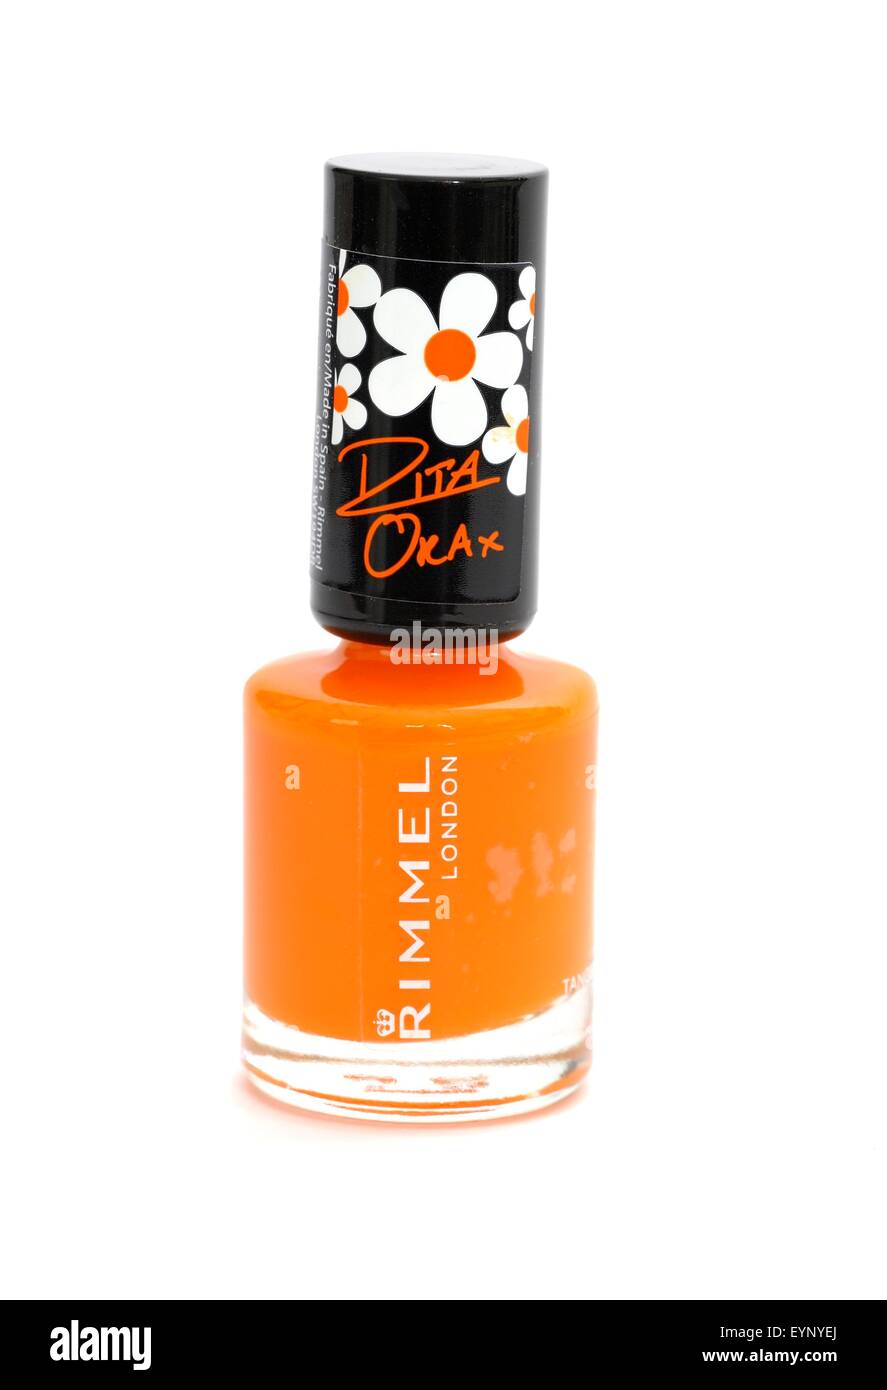 Rimmel London Rita Ora tangerine tent 60 seconds super shine nail polish Stock Photo